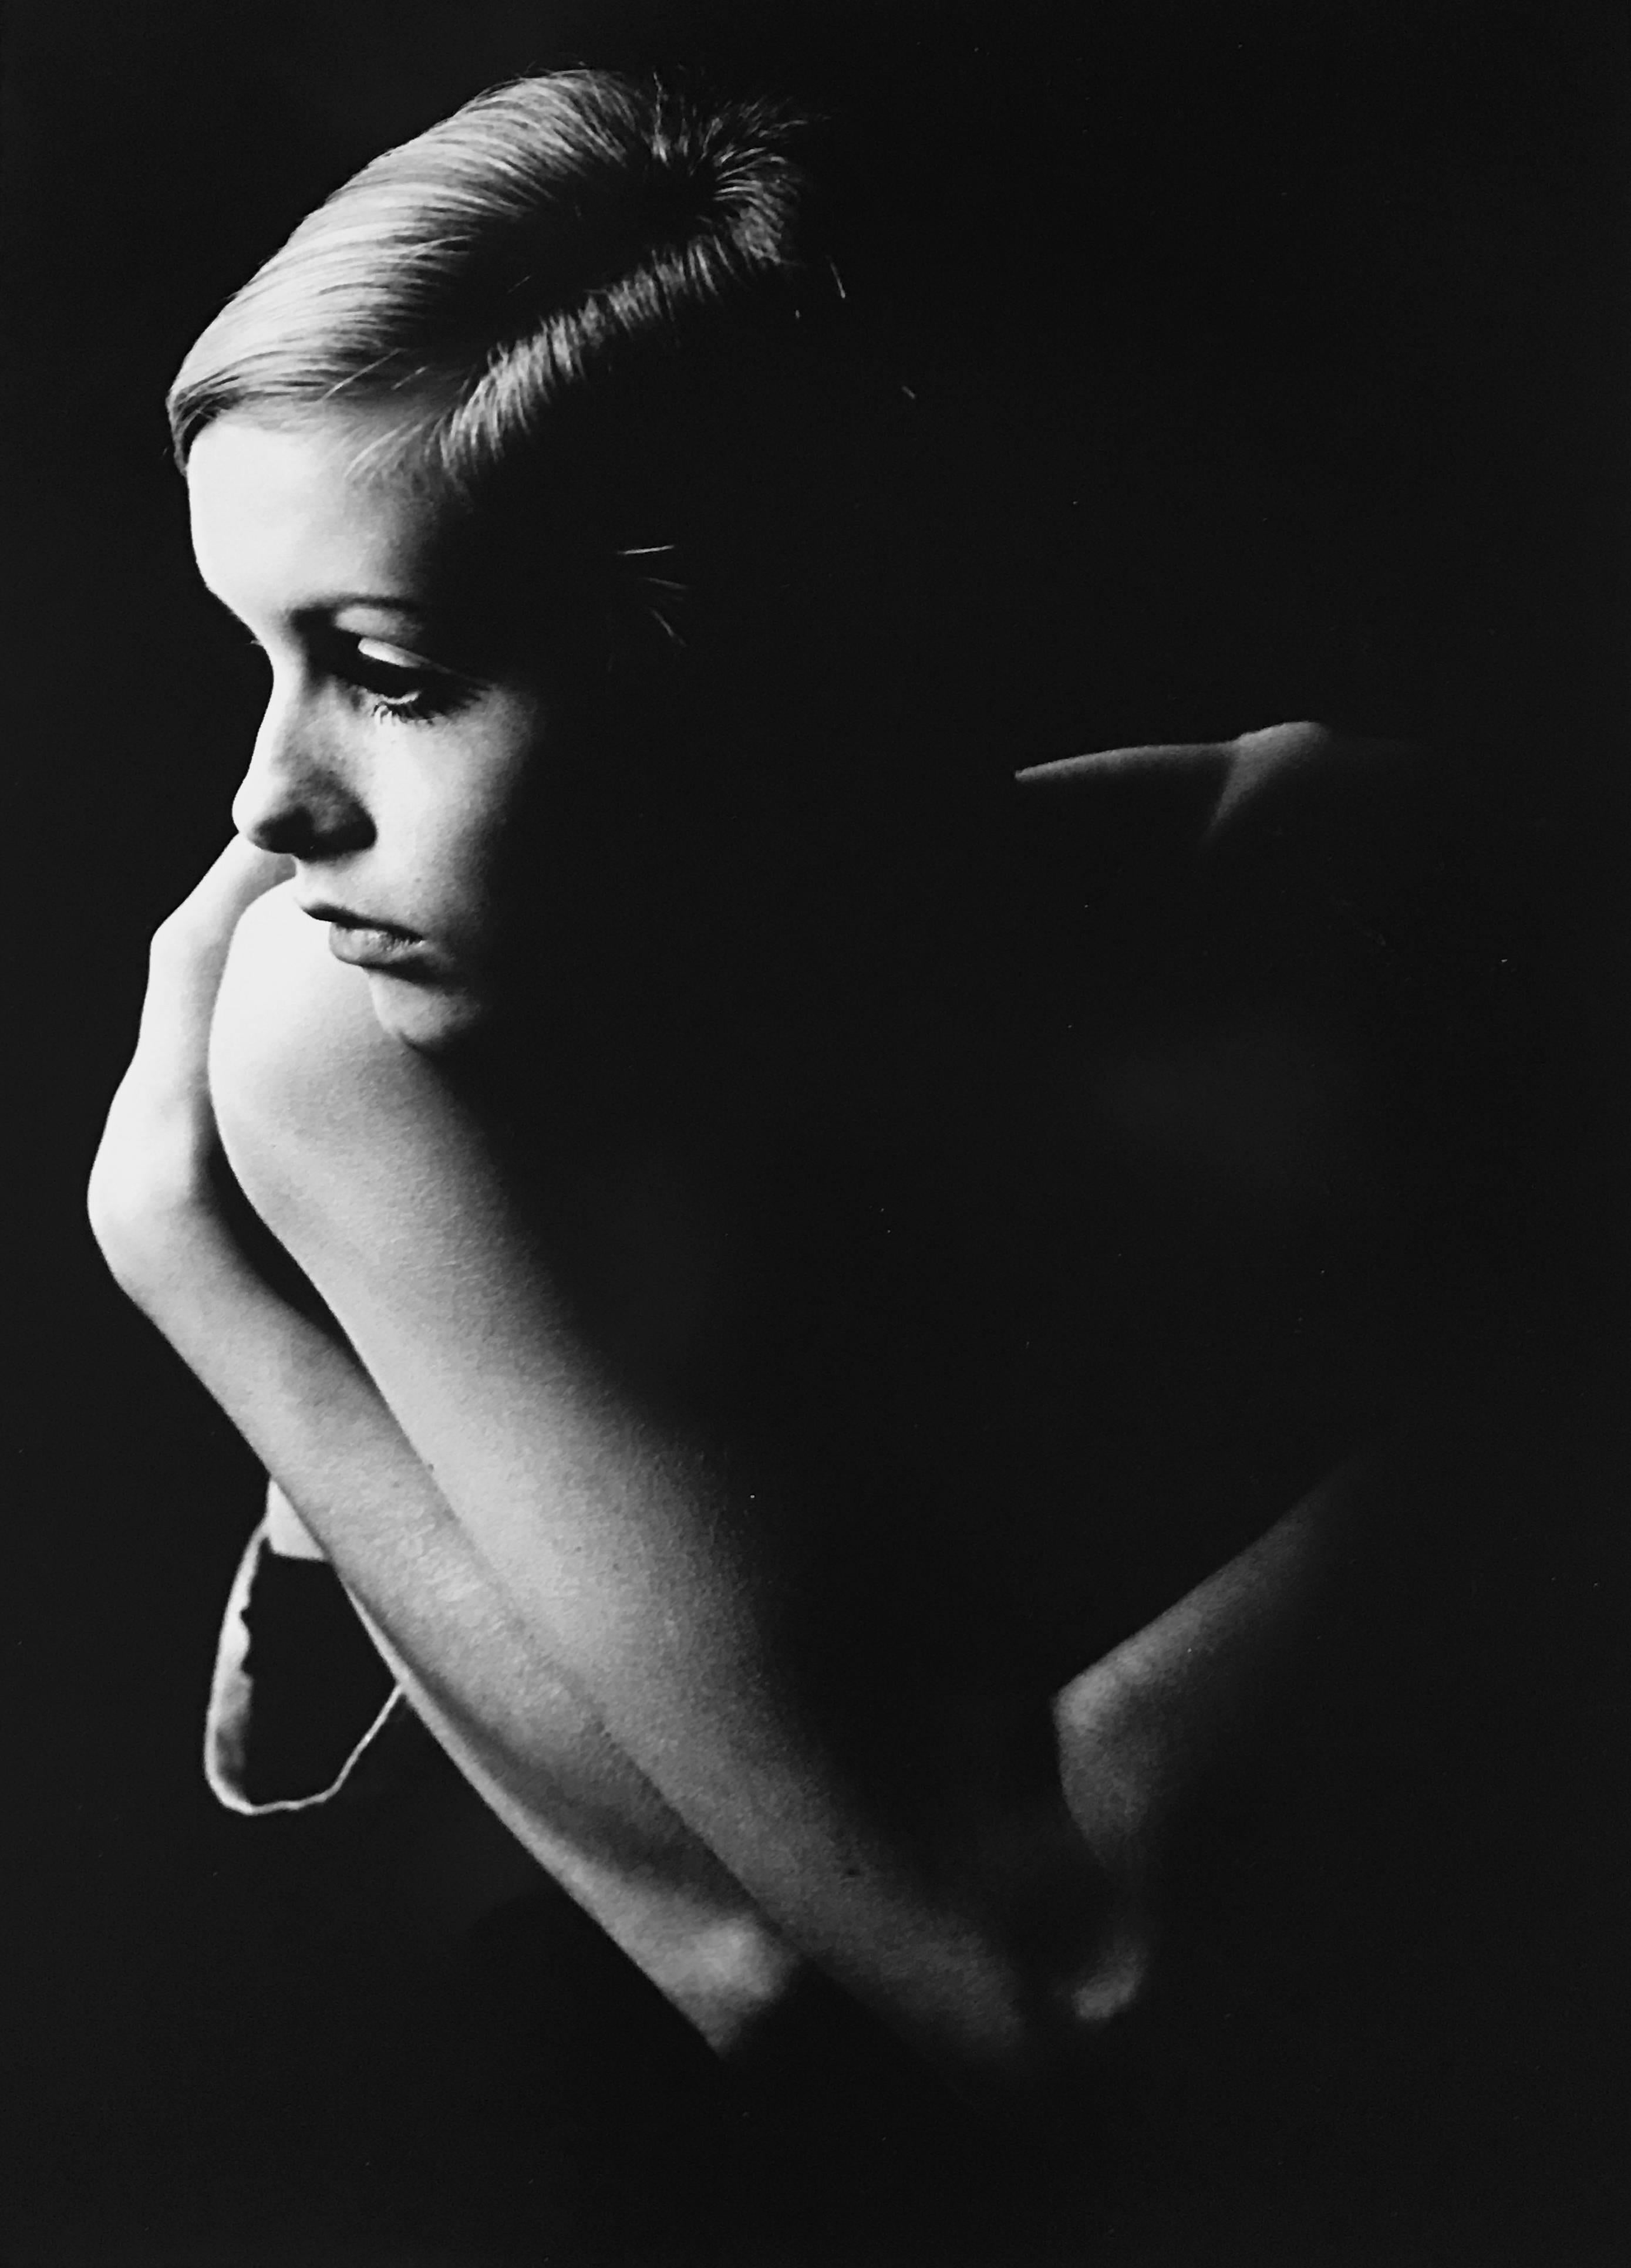 Burt Glinn Portrait Photograph - Twiggy, London, Black and White Fashion Photography 1960s Top Model Britain 